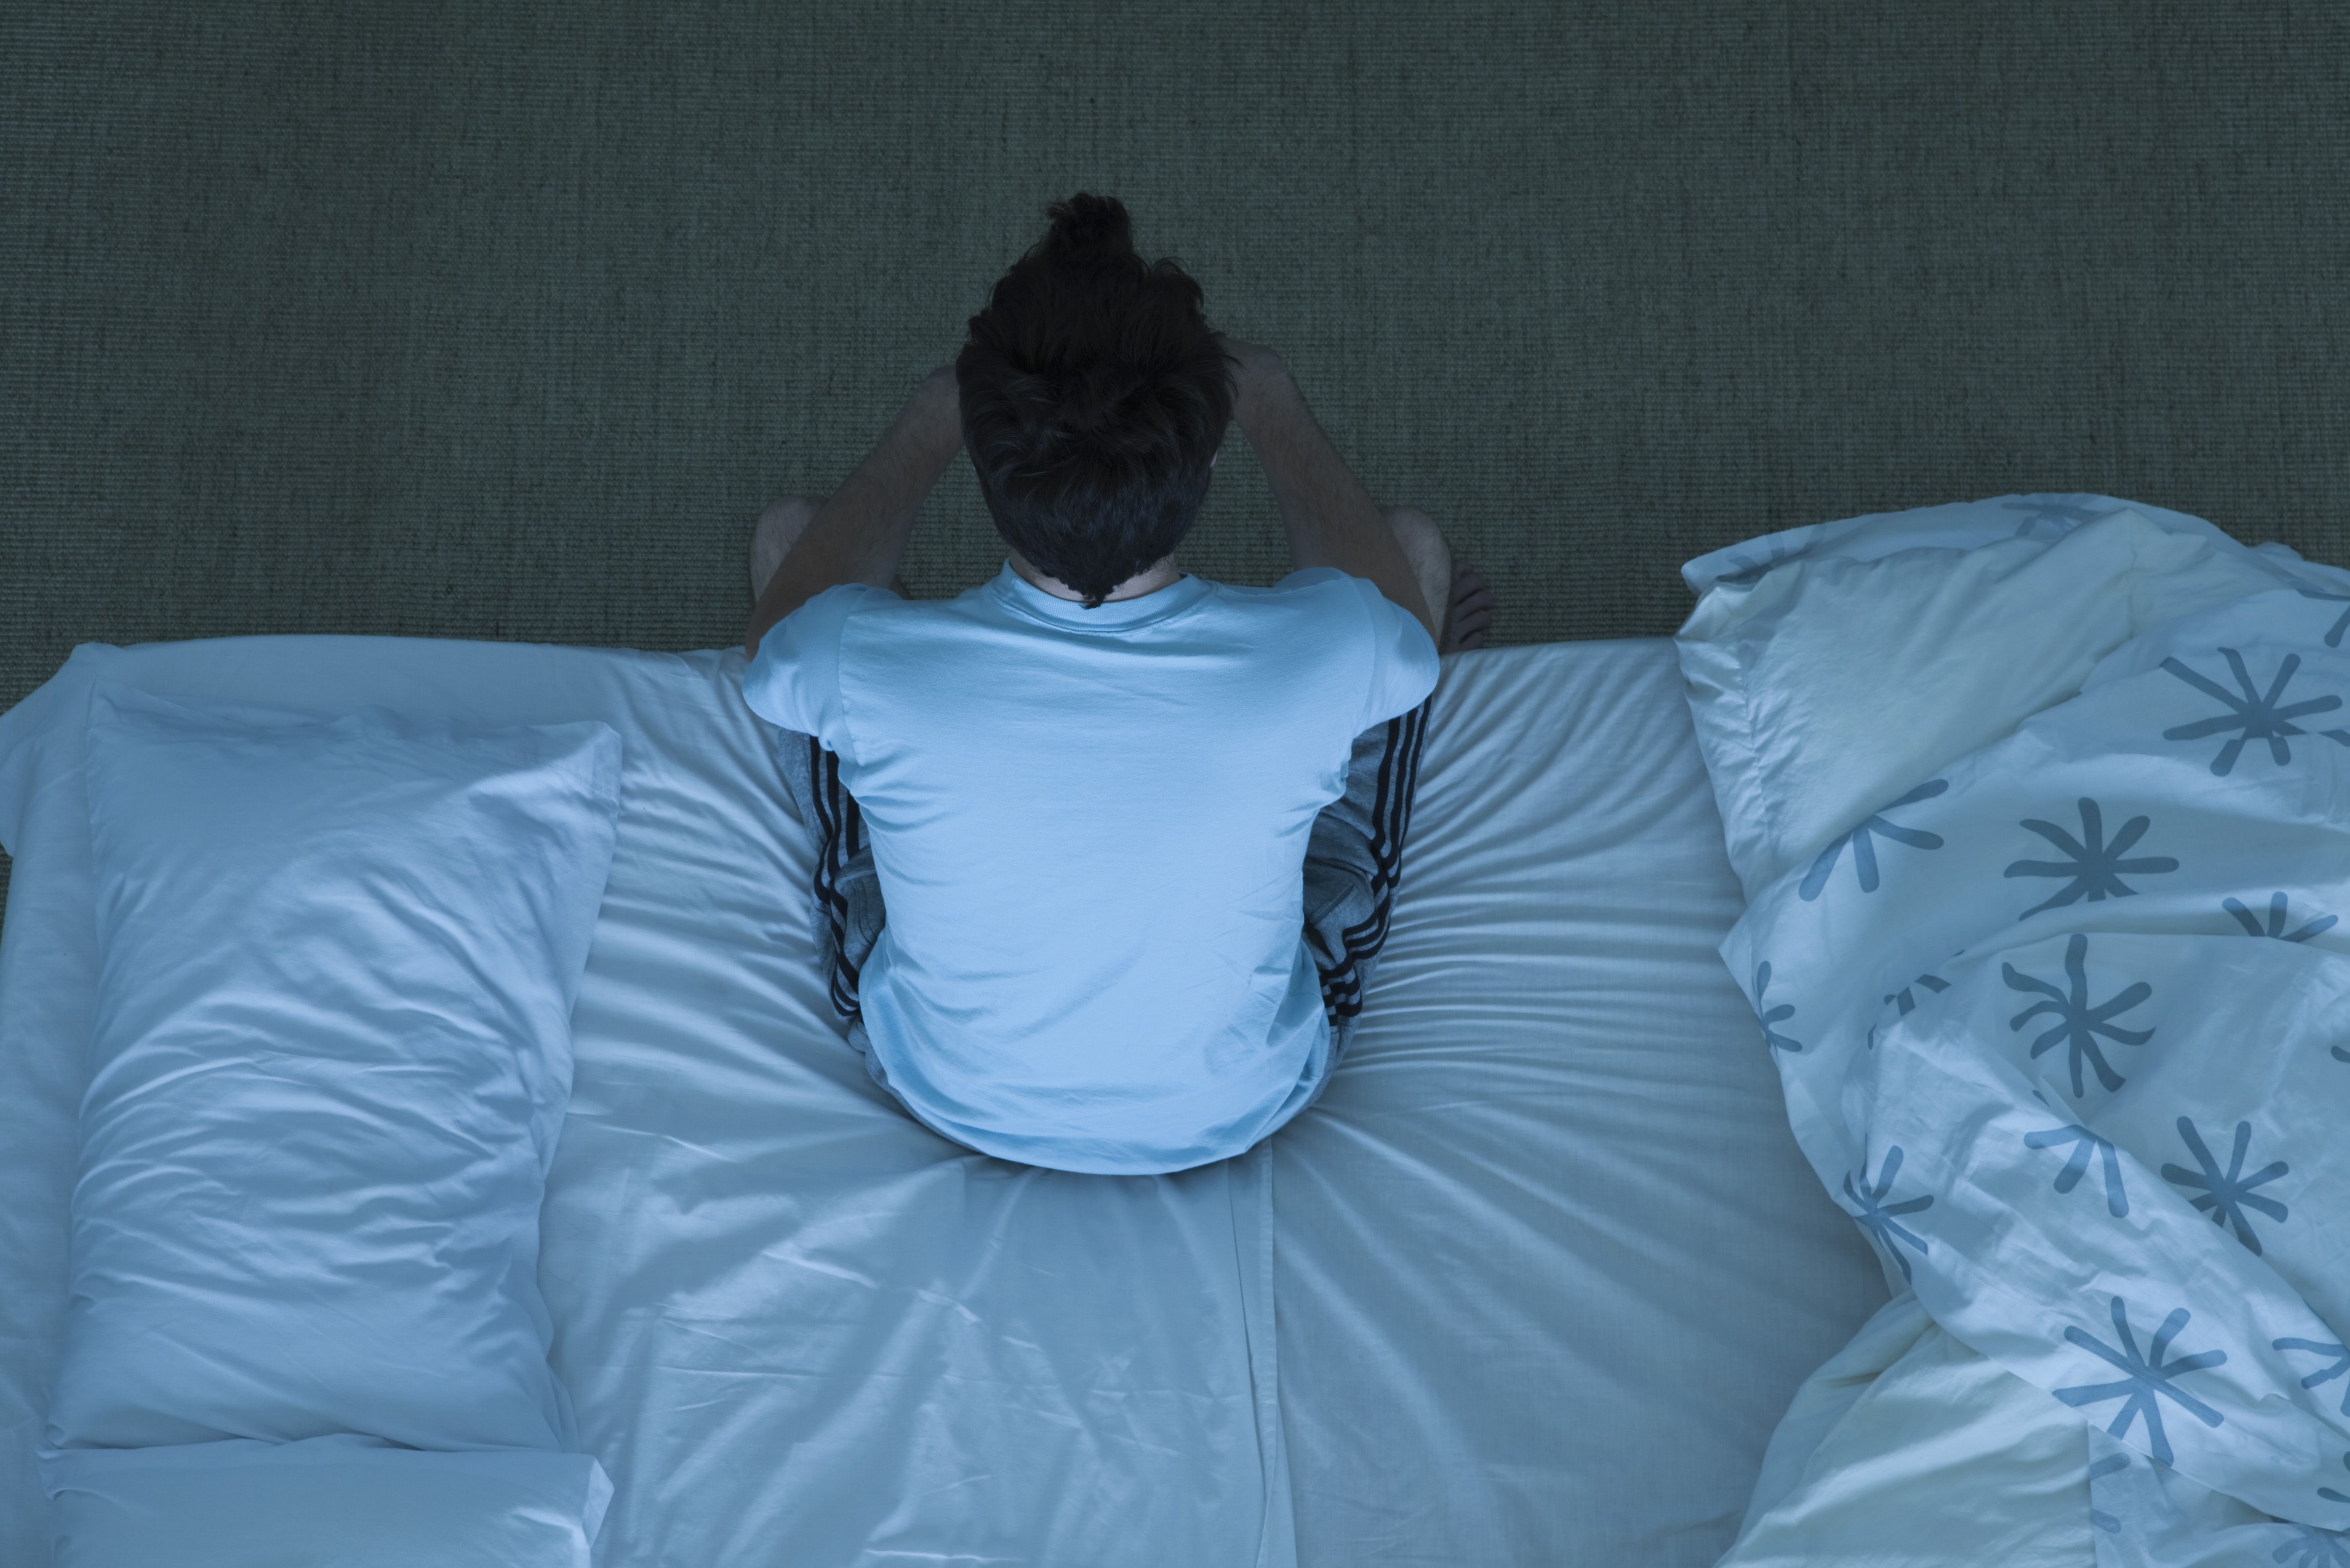 A Stayed Awake 264 Hours and Set Sleep Loss Record